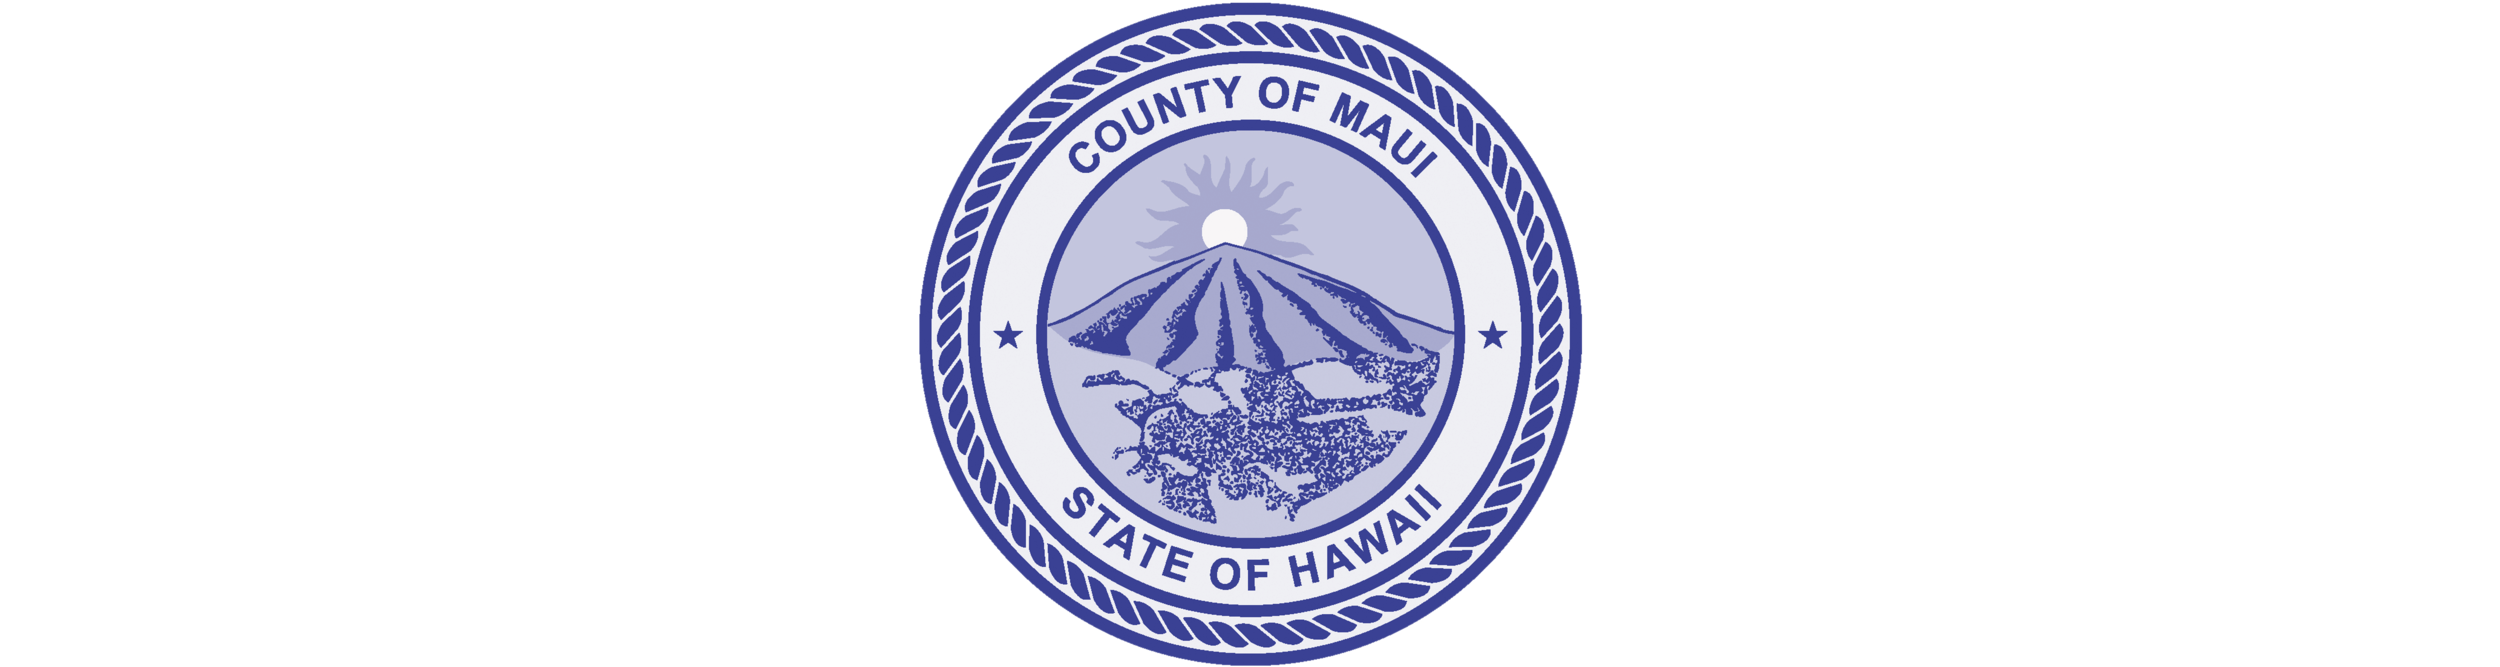 HPHA-Ressourcen-logo-Maui-County.png